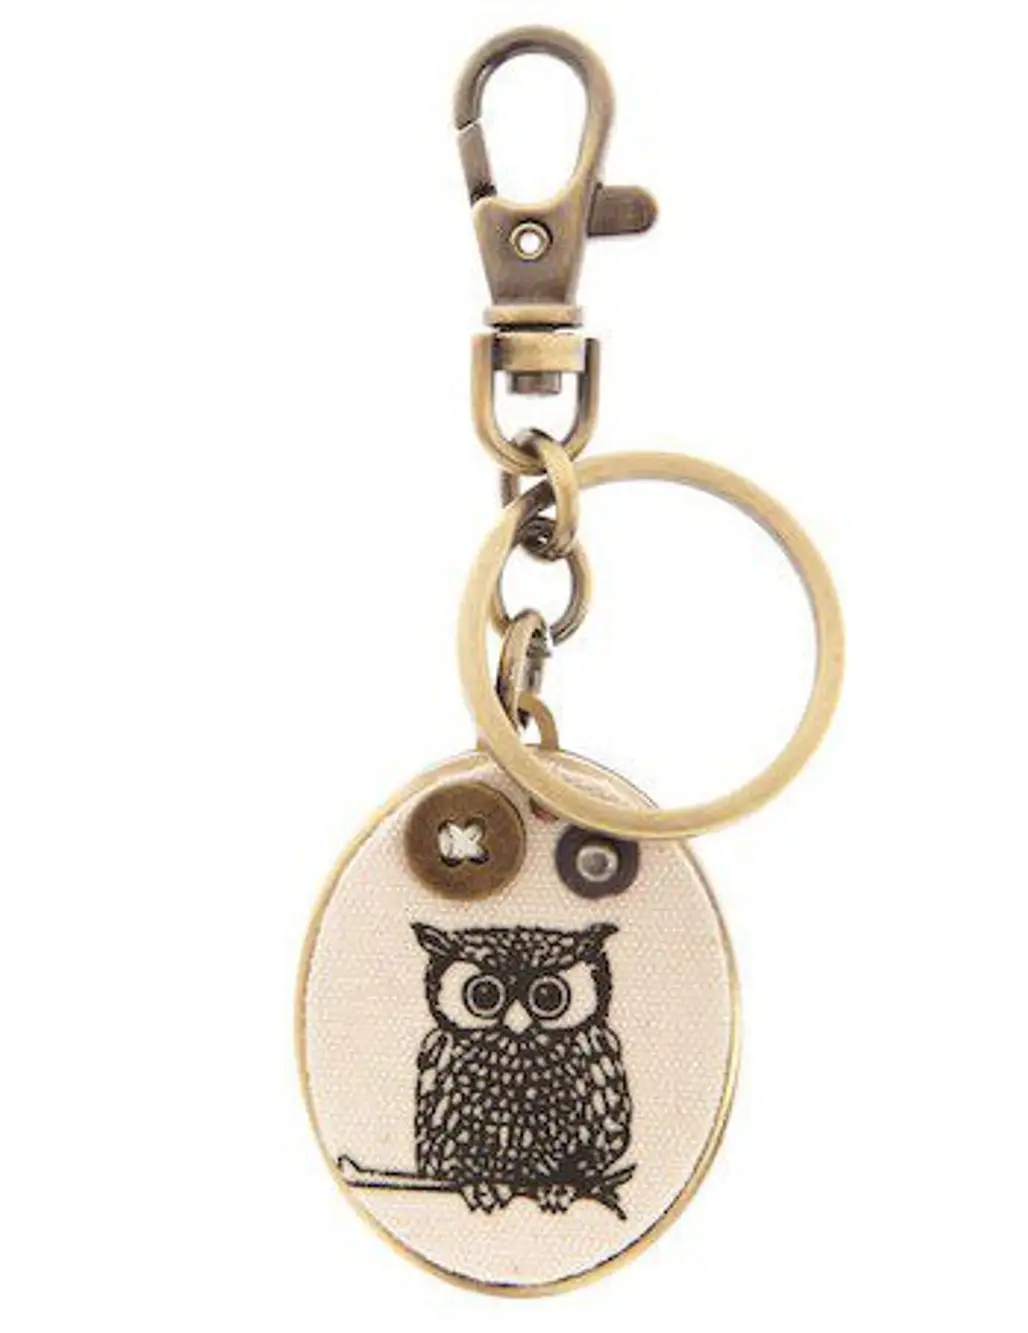 Never Locked Owl-t Key Chain